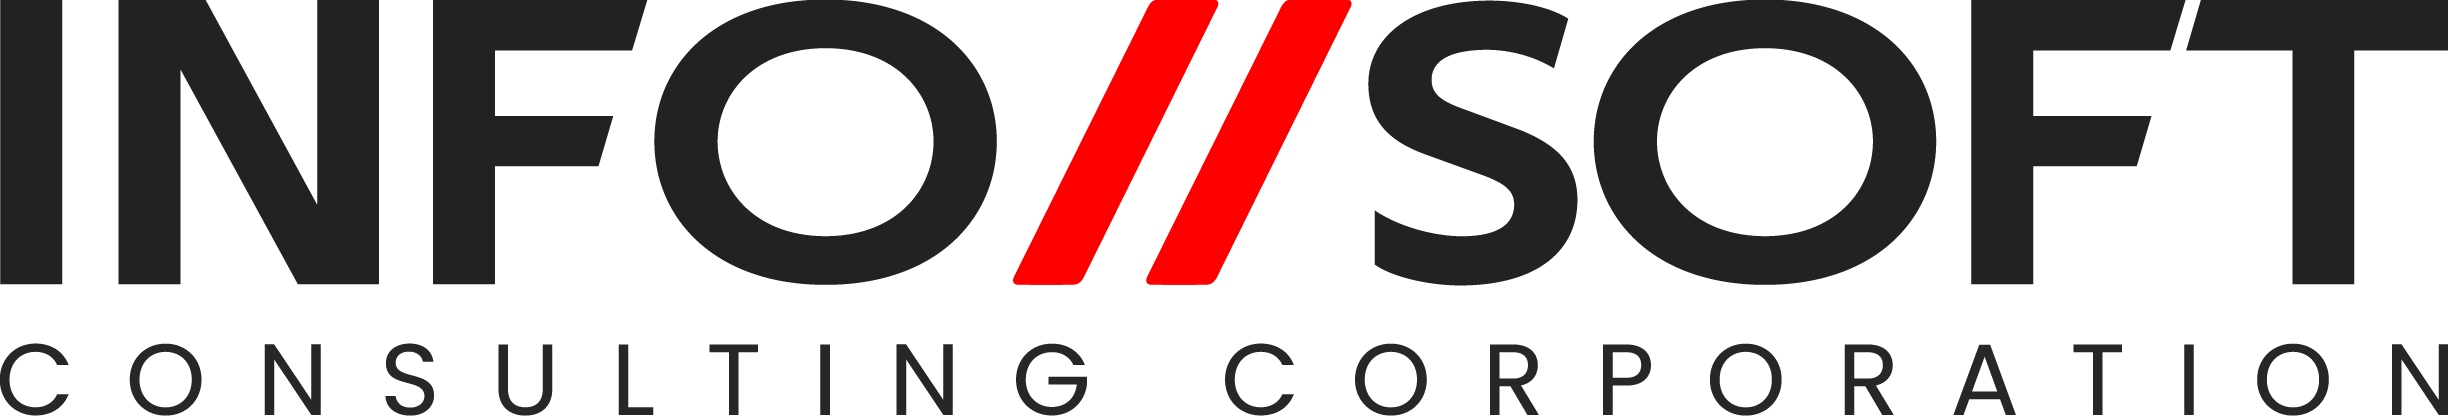 Infosoft Consulting Corporation Logo